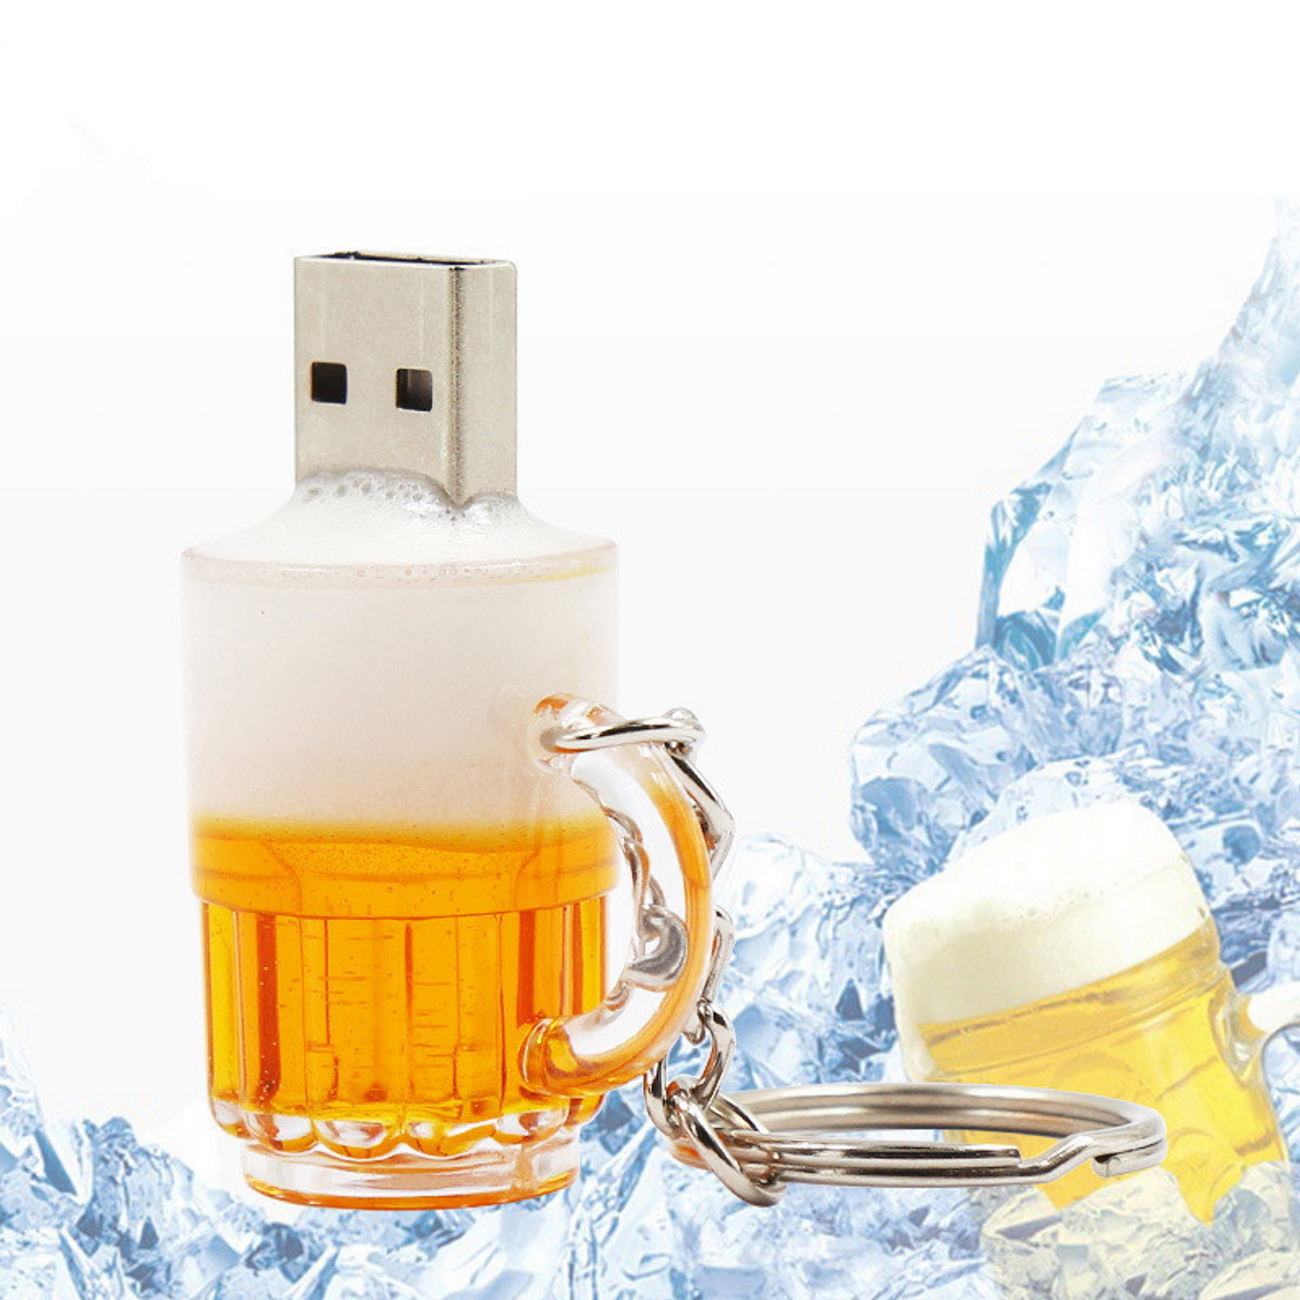 ® (Mehrfarbig, GB) Bierkrug 16 GERMANY USB USB-Stick